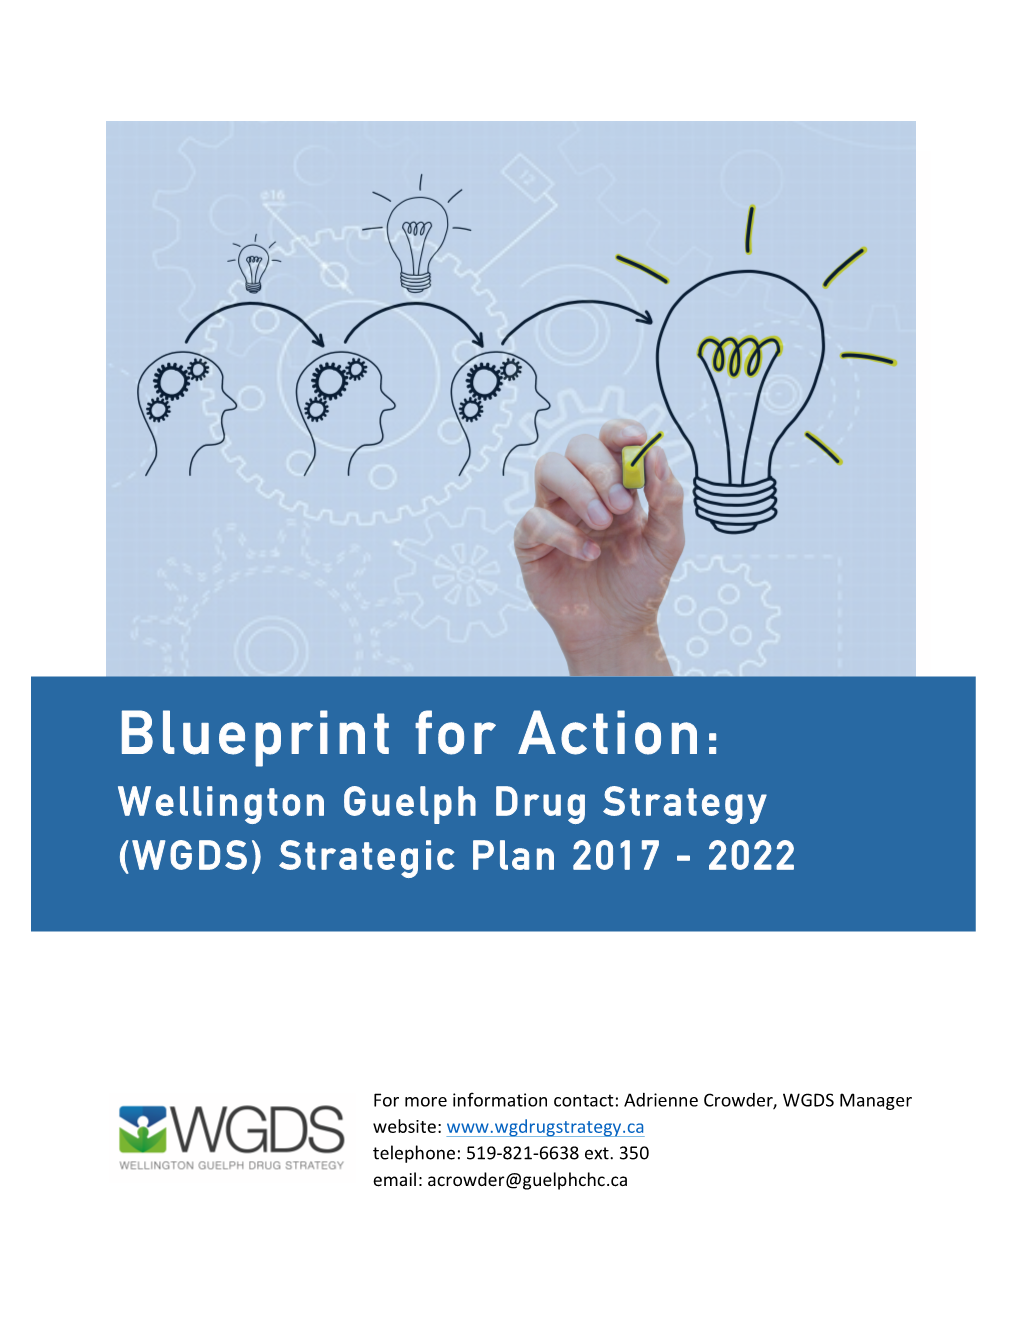 Blueprint for Action: Wellington Guelph Drug Strategy (WGDS) Strategic Plan 2017 - 2022